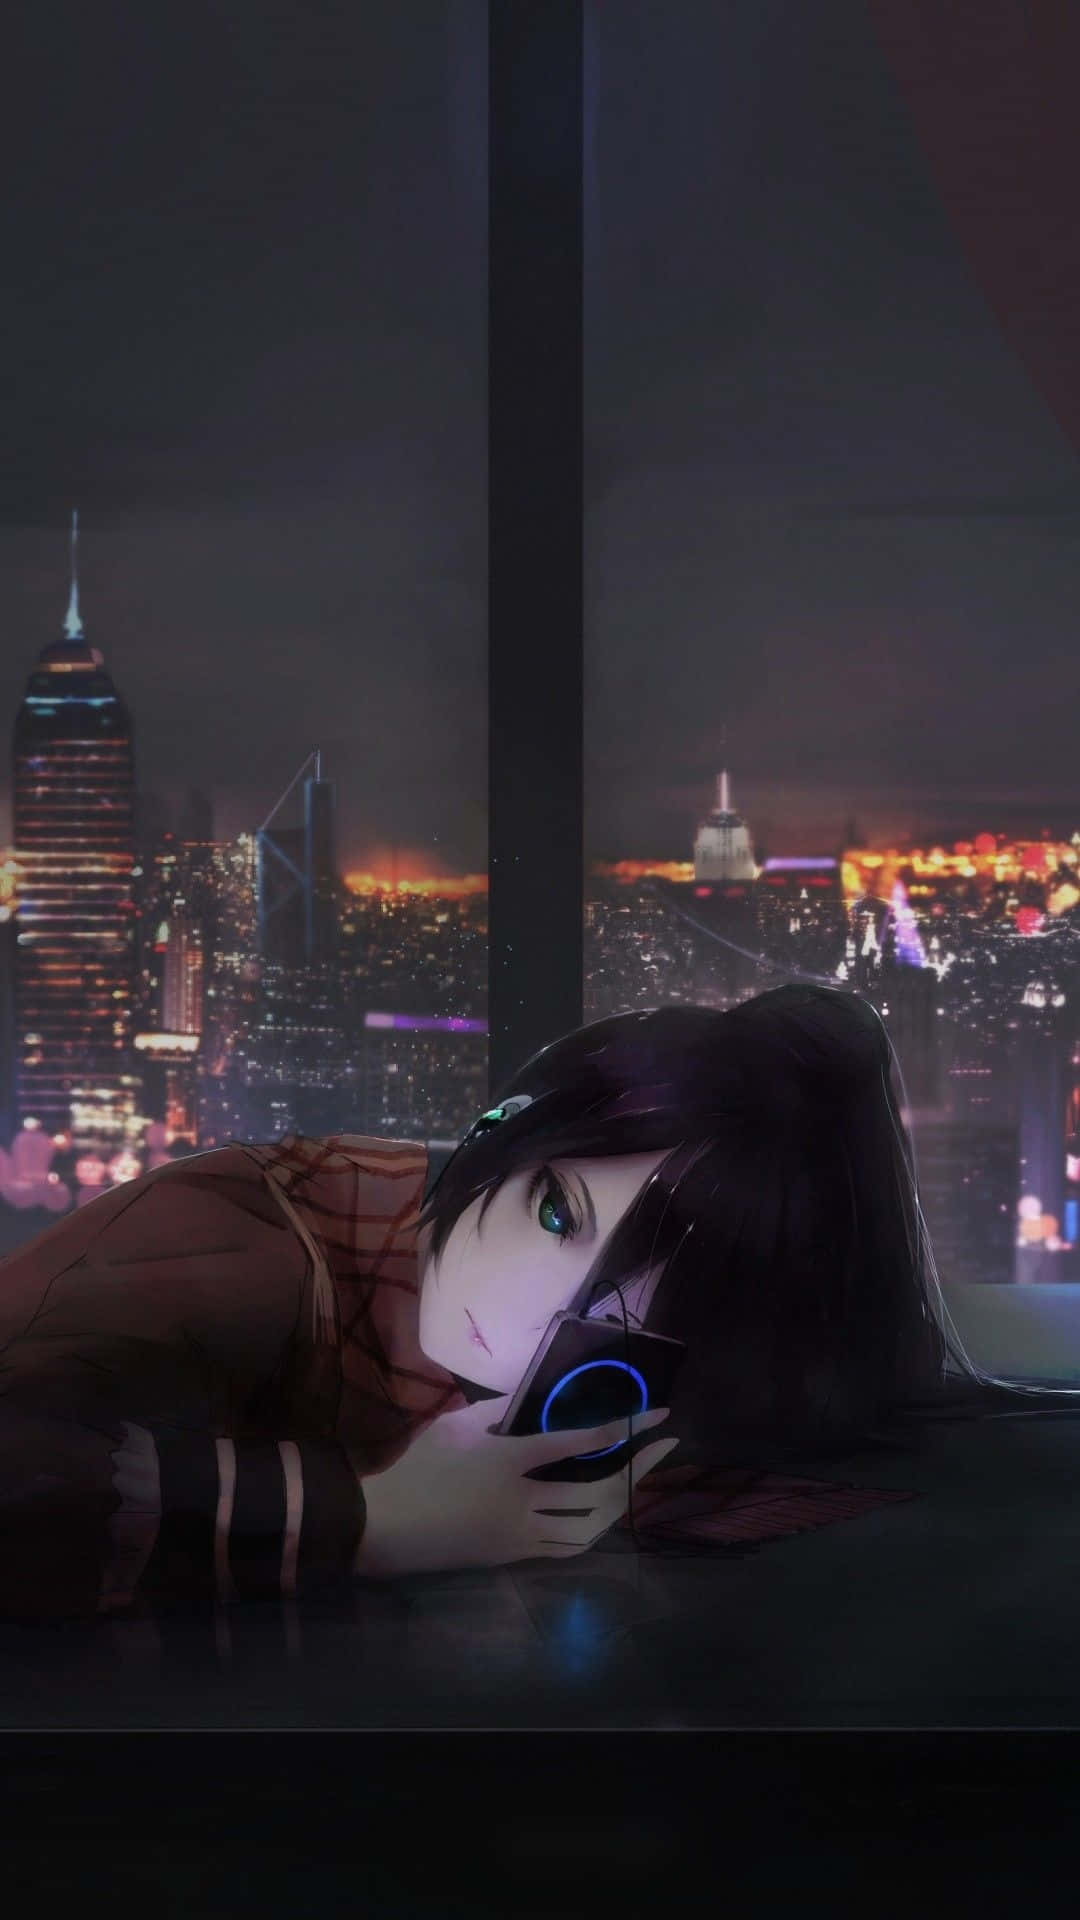 Sad Aesthetic Anime Girl Looks Into Phone Wallpaper